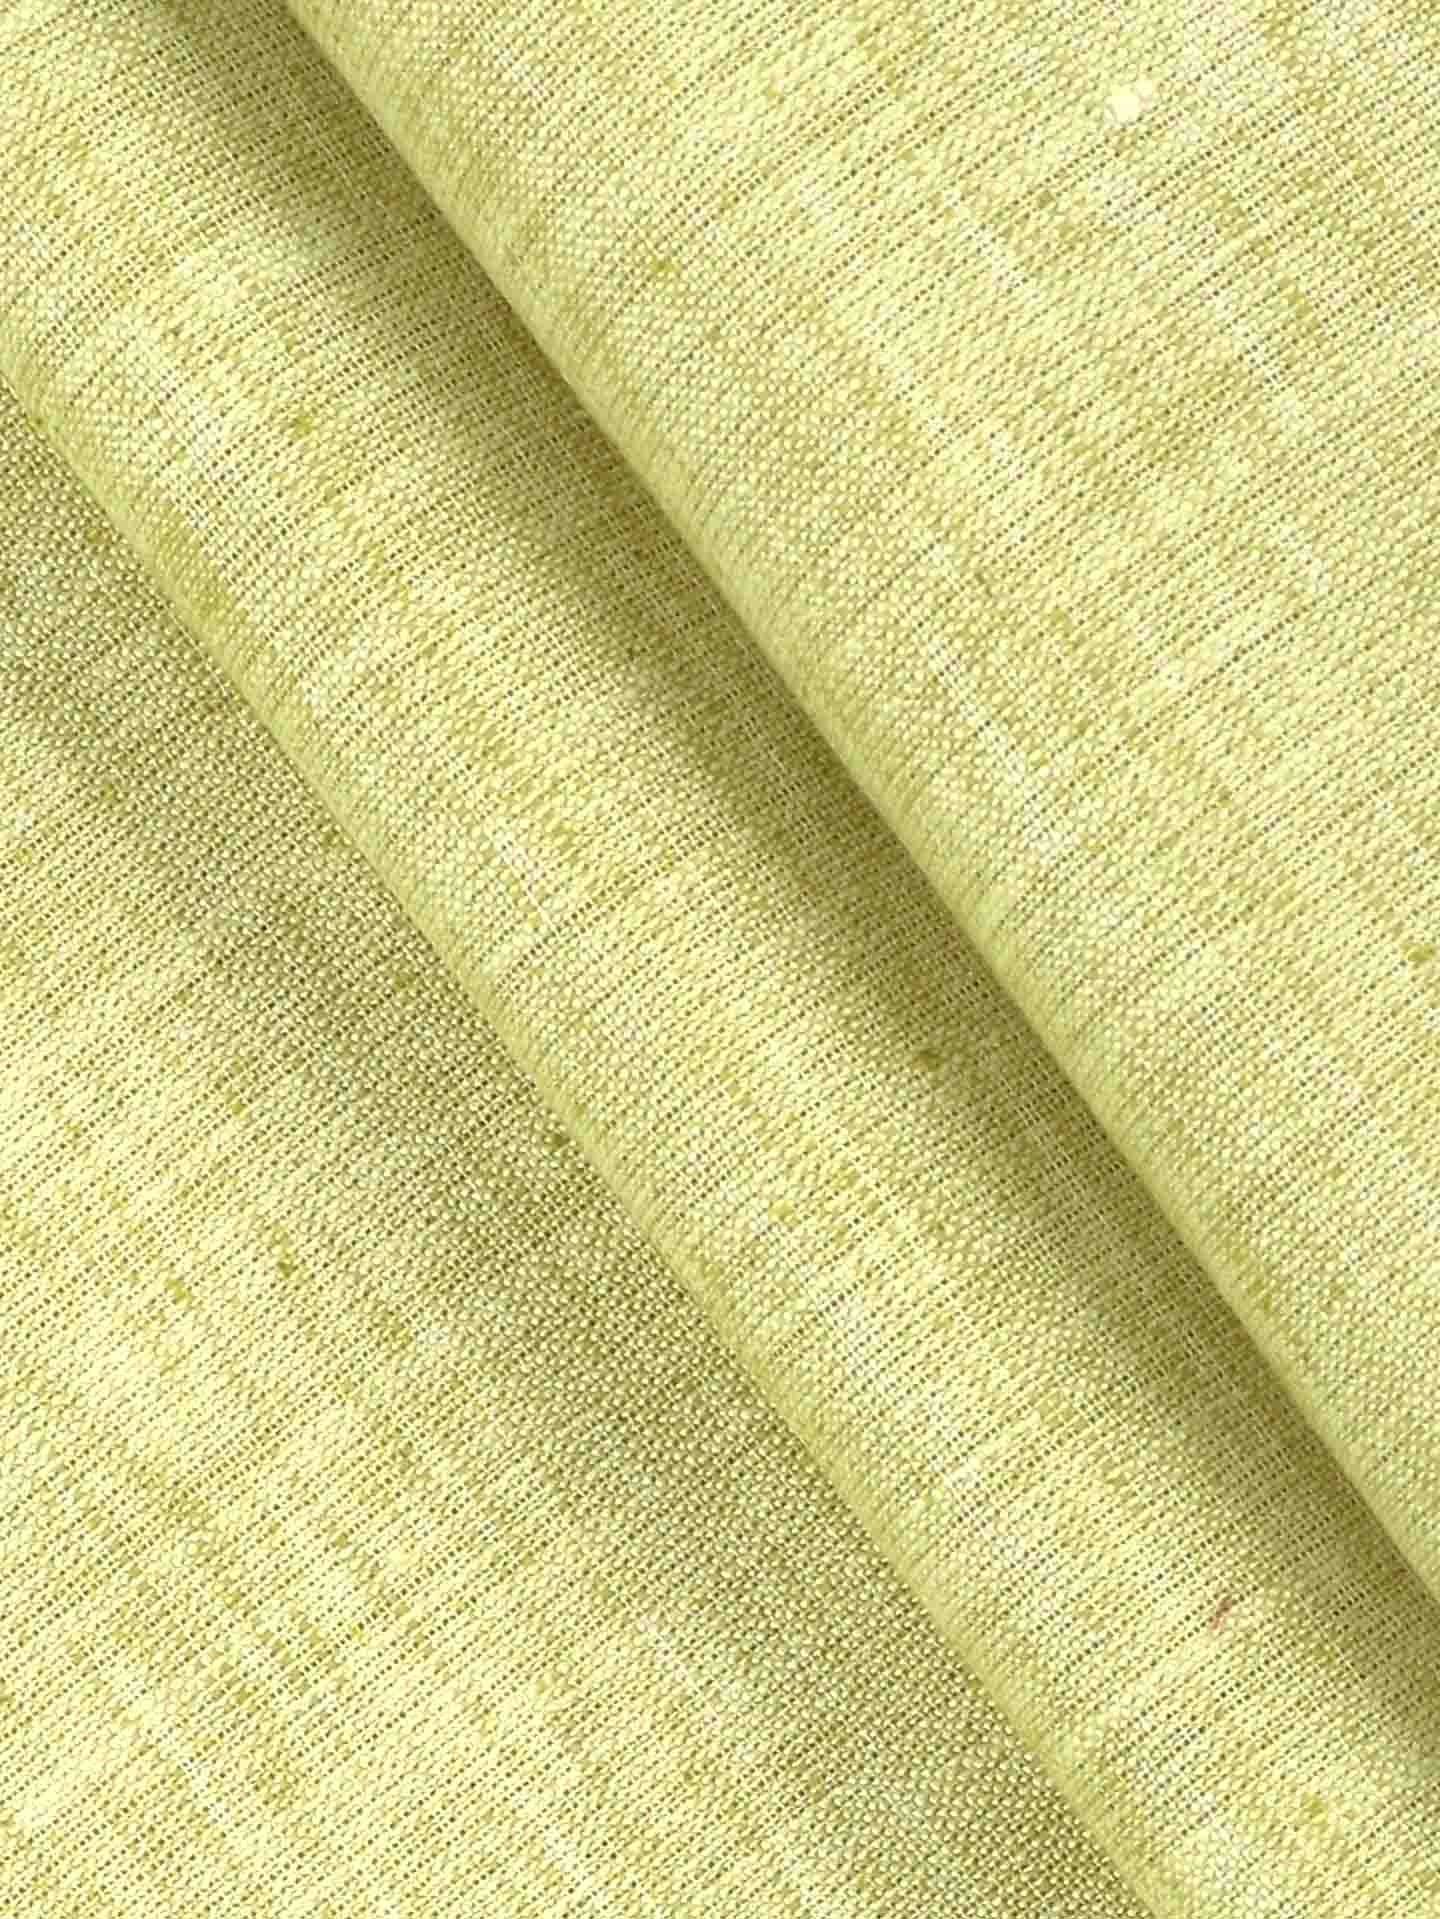 Cotton Blend Olive Green  Colour Kurtha Fabric Lampus - APC1106-26